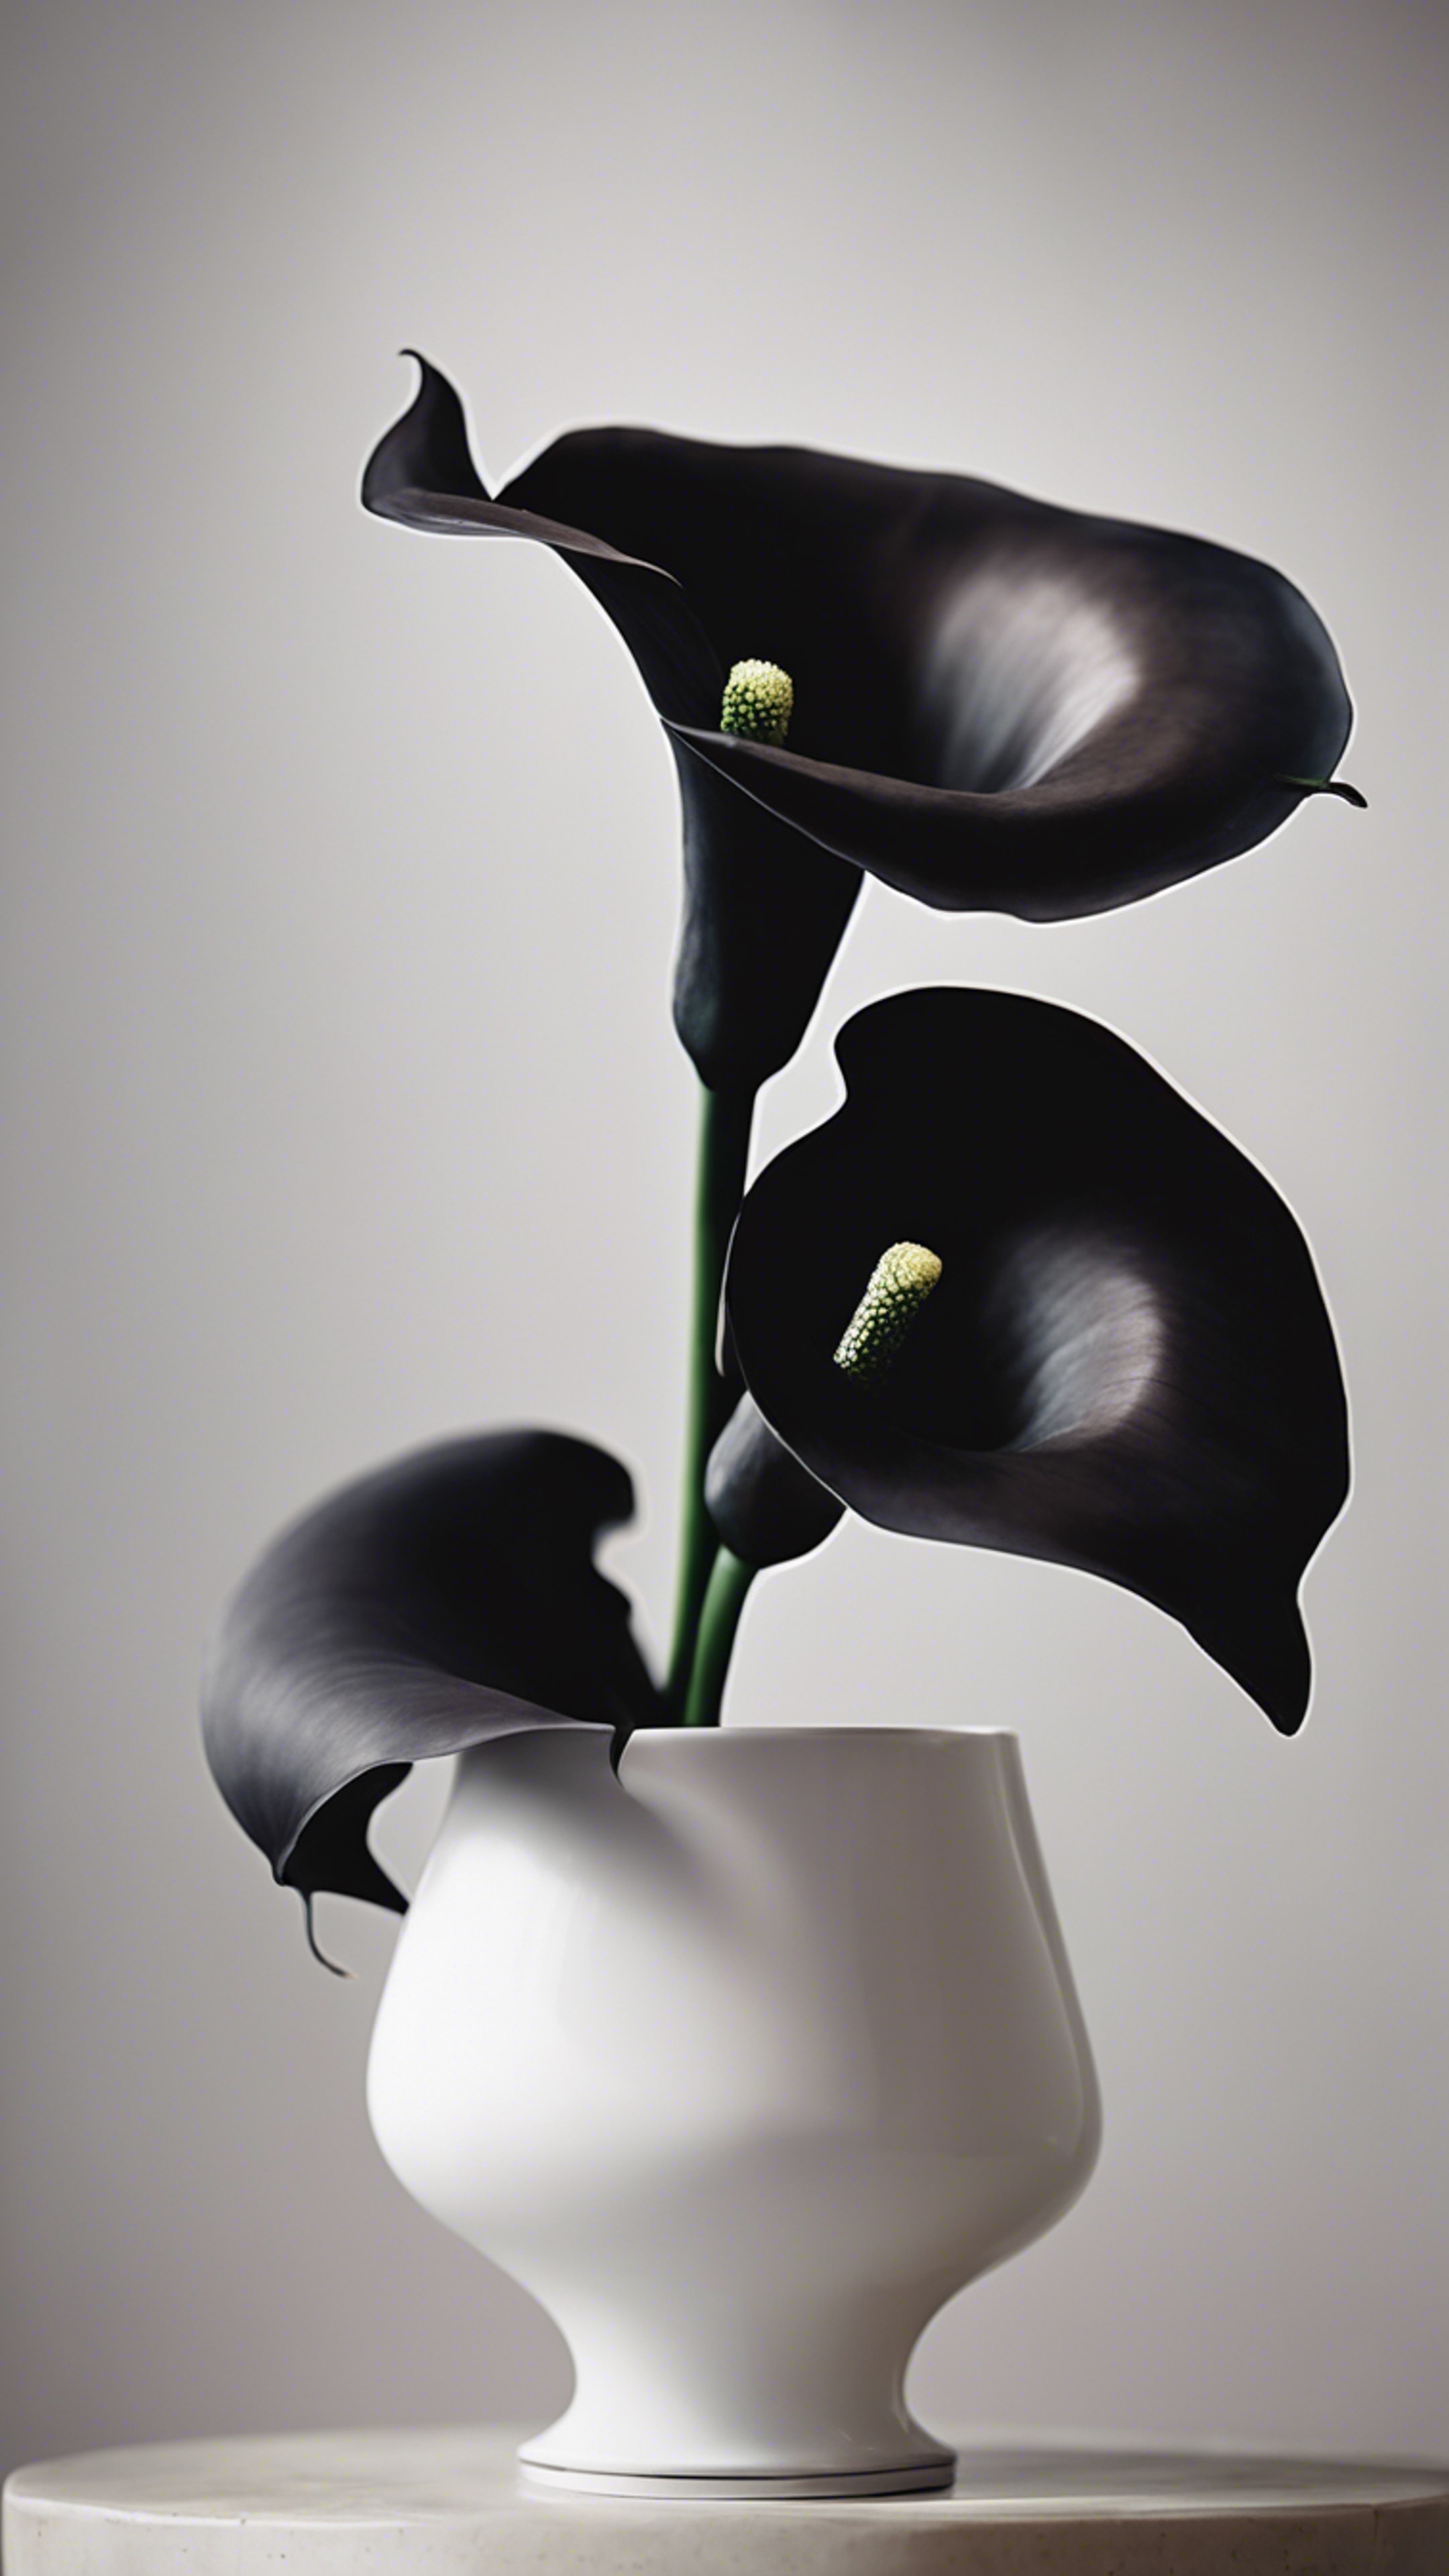 A breathtaking centerpiece featuring a black calla lily in a modern white vase. 벽지[9d5d01b6790e4db4a8d5]